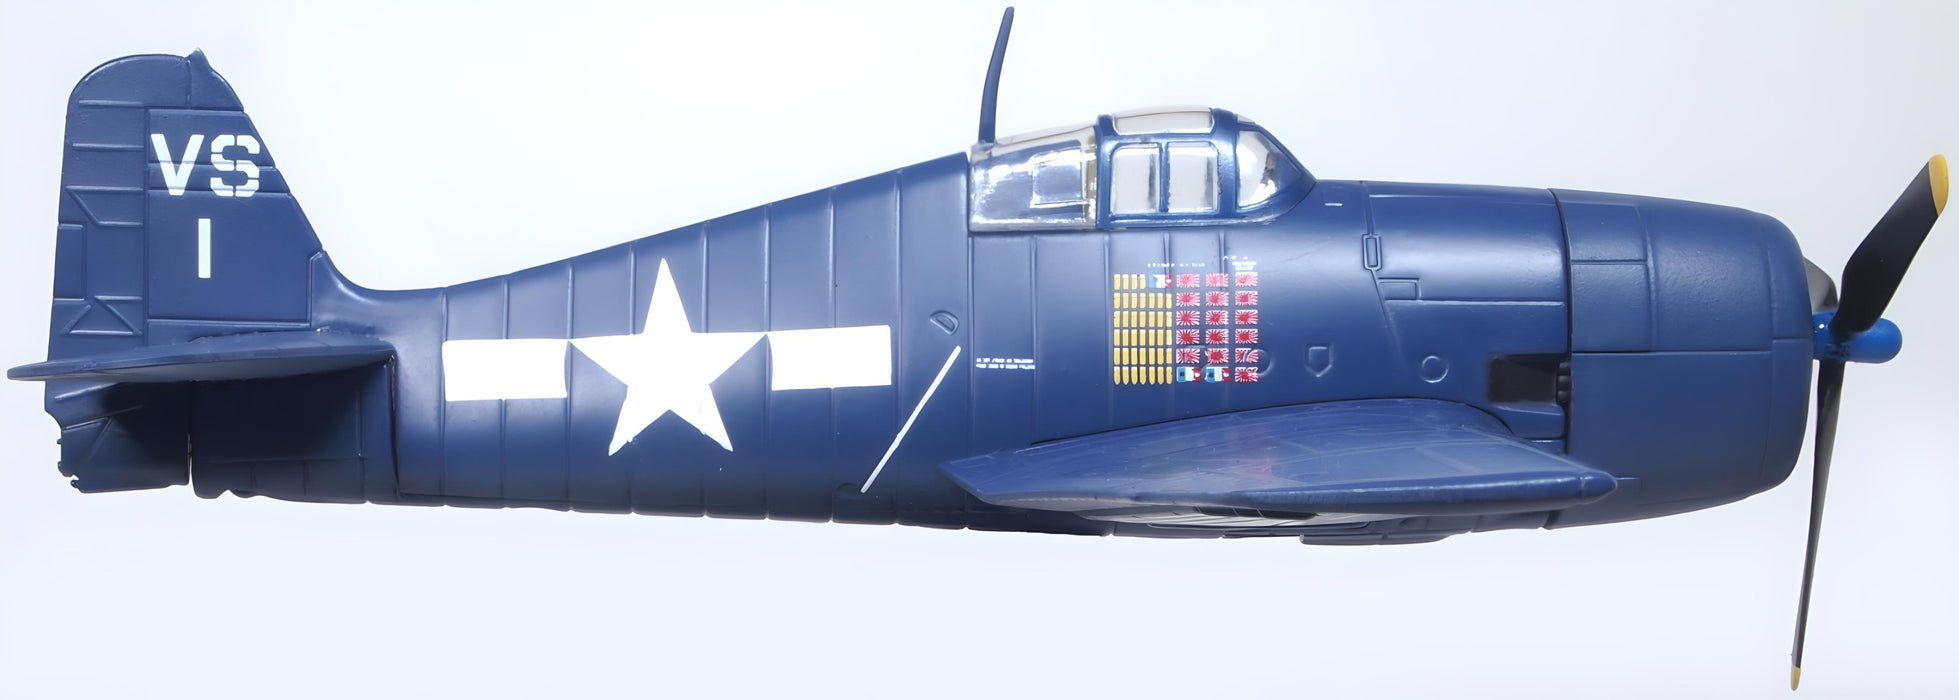 Oxford Diecast Grumman Hellcat F6F-5 Lt.Cdr.Willard E. Eder. US Navy 1945 1:72 scale right